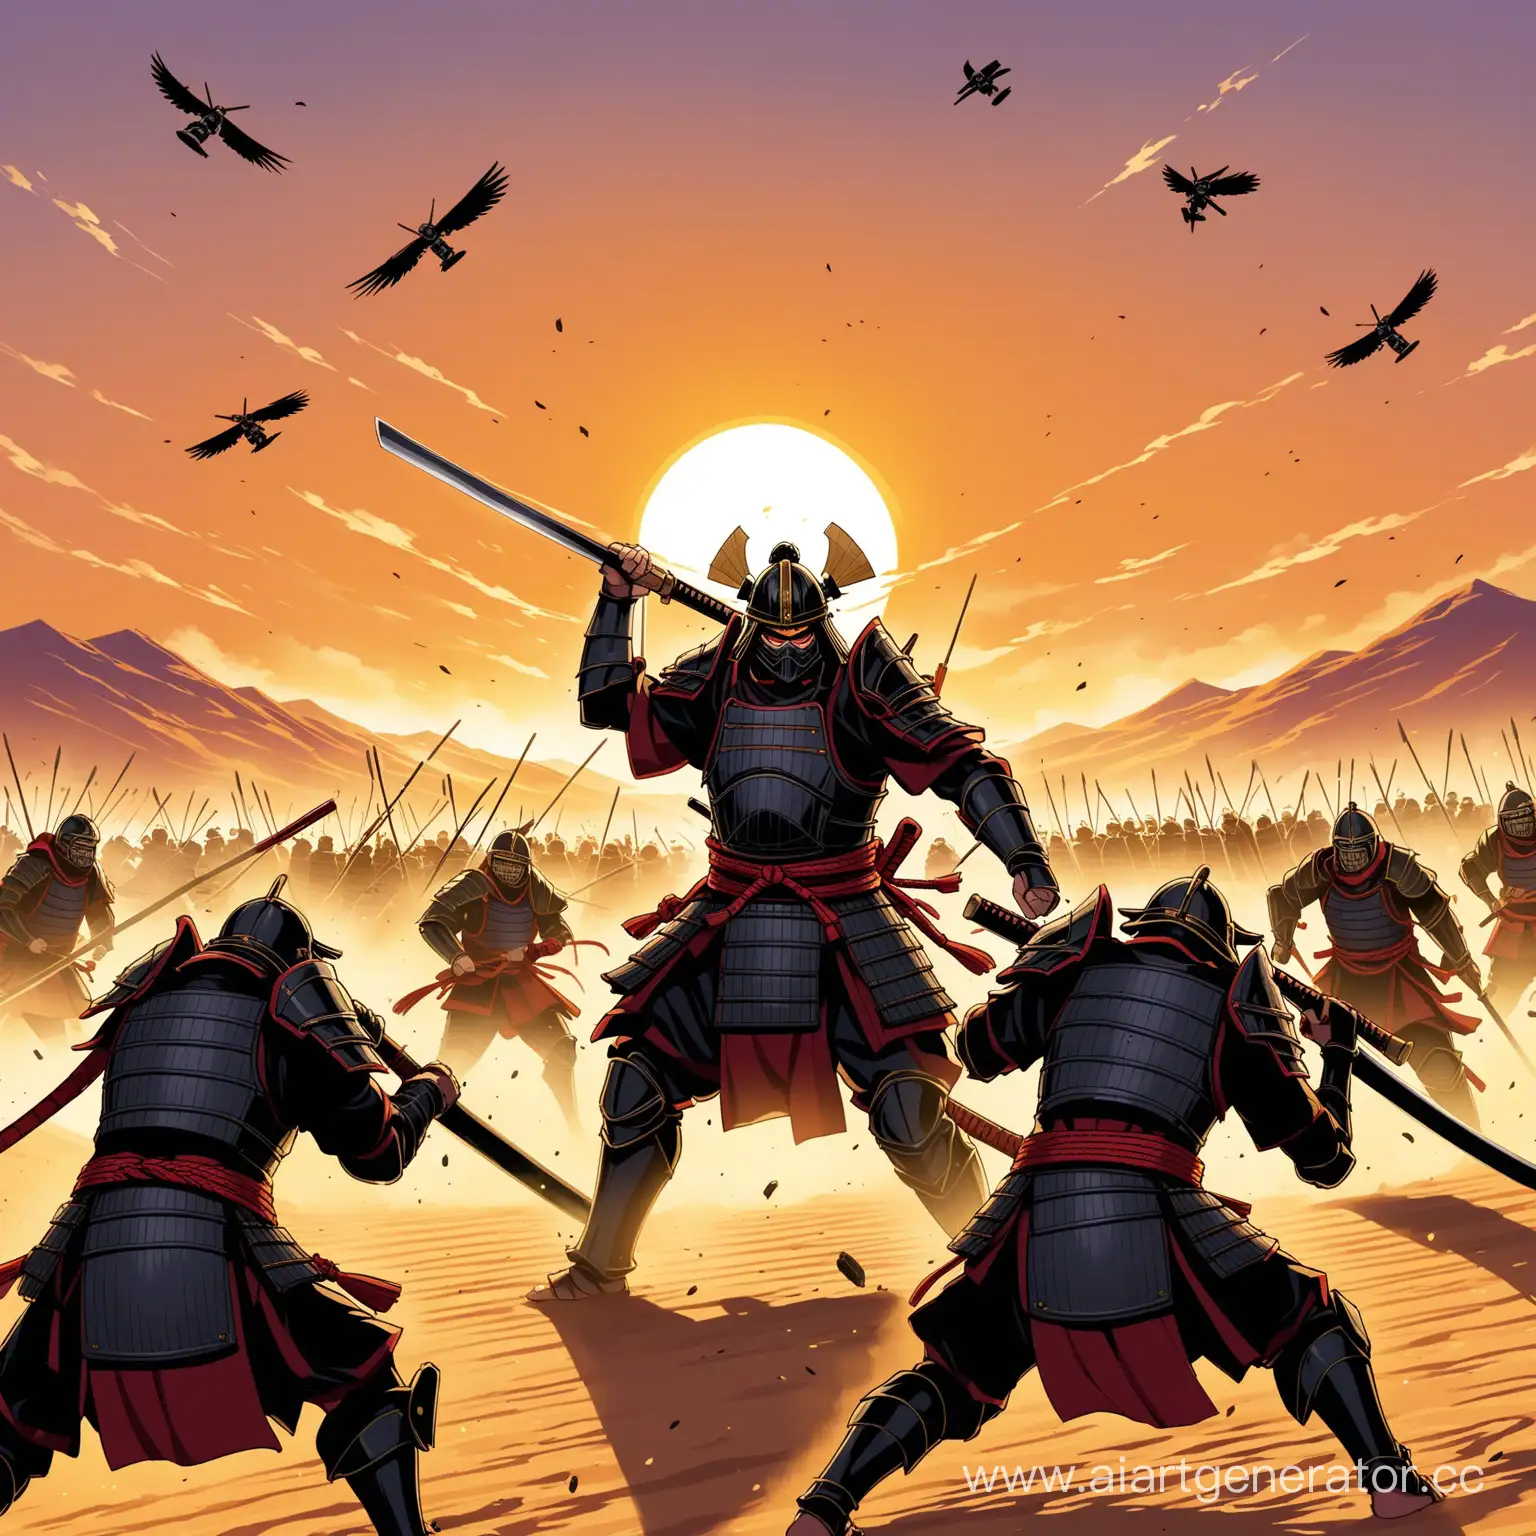 Epic-Battle-Shogun-with-Robotic-Limb-vs-Shinobi-Amidst-Legionaries-and-Samurai-at-Sunset